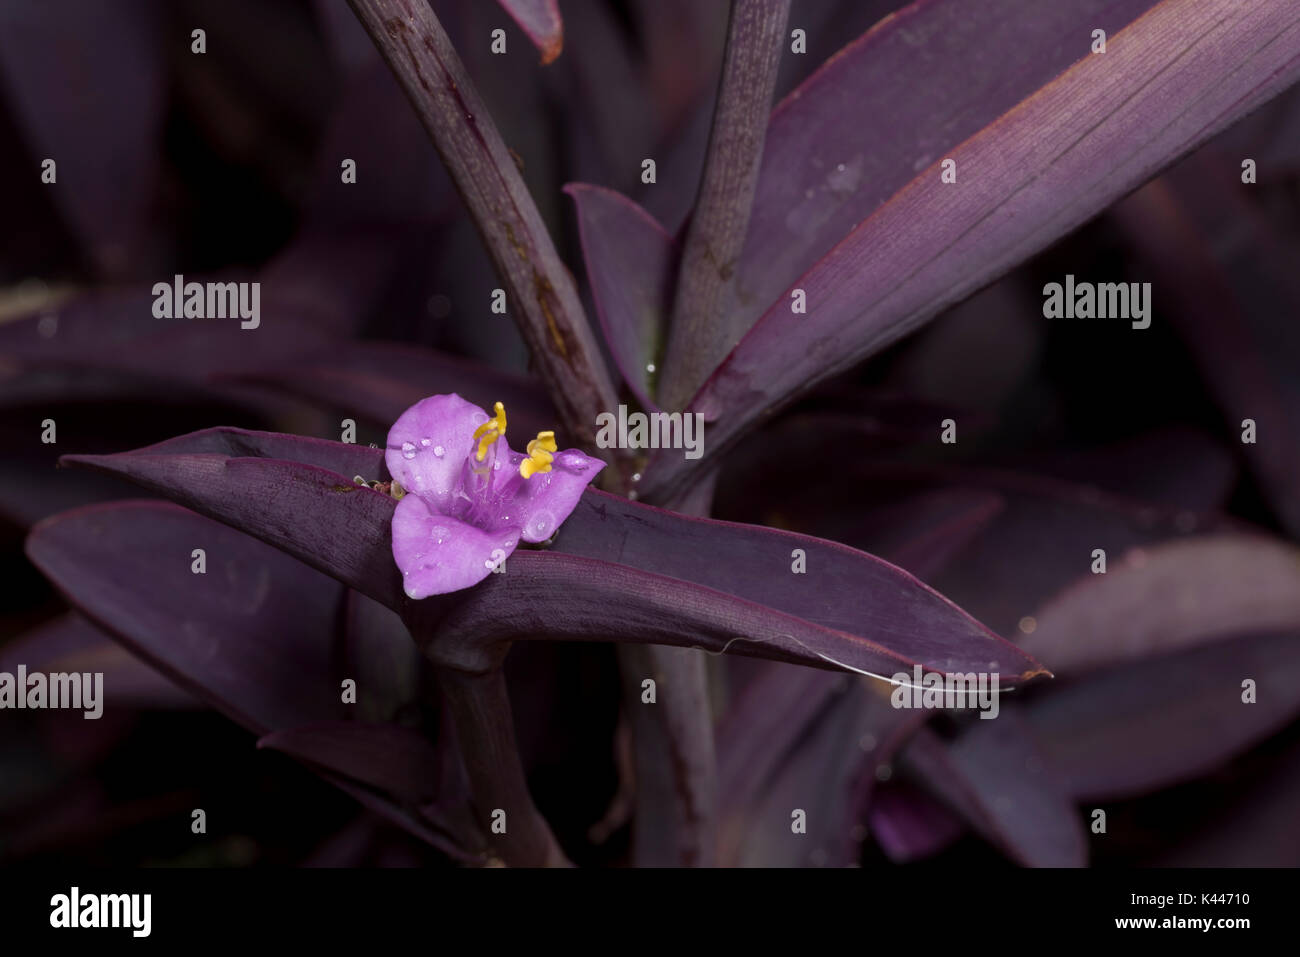 Purple Heart Or Setcresea (tradescantia pallida purpurea) closeup of the flower Stock Photo